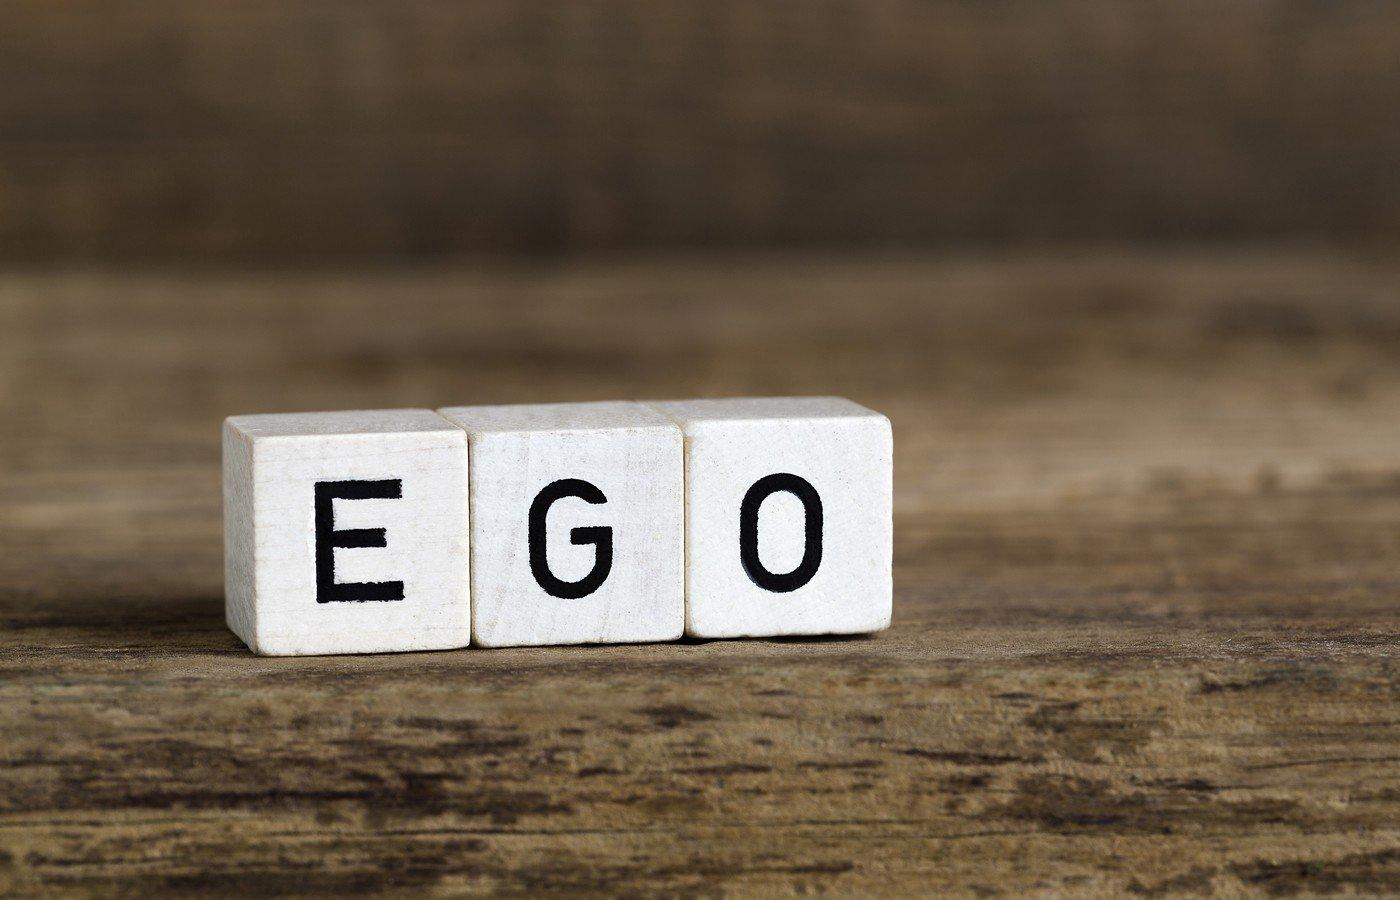 L’Ego ostacola le relazioni